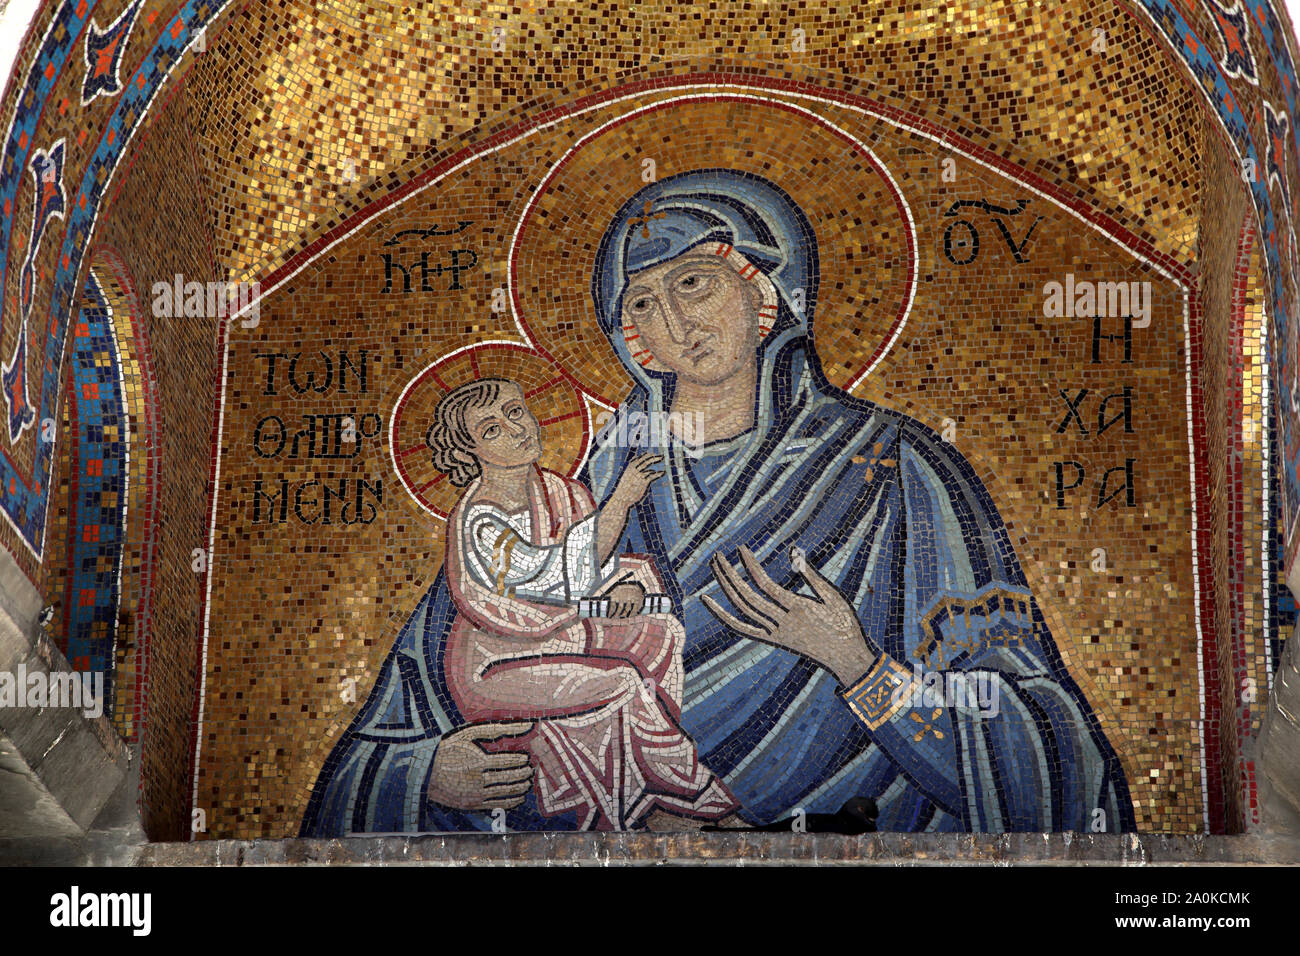 Athens Greece Monastiraki Panaghia Kapnikarea Church Kapnikareas Square - Mosaic of Madonna and Child Stock Photo